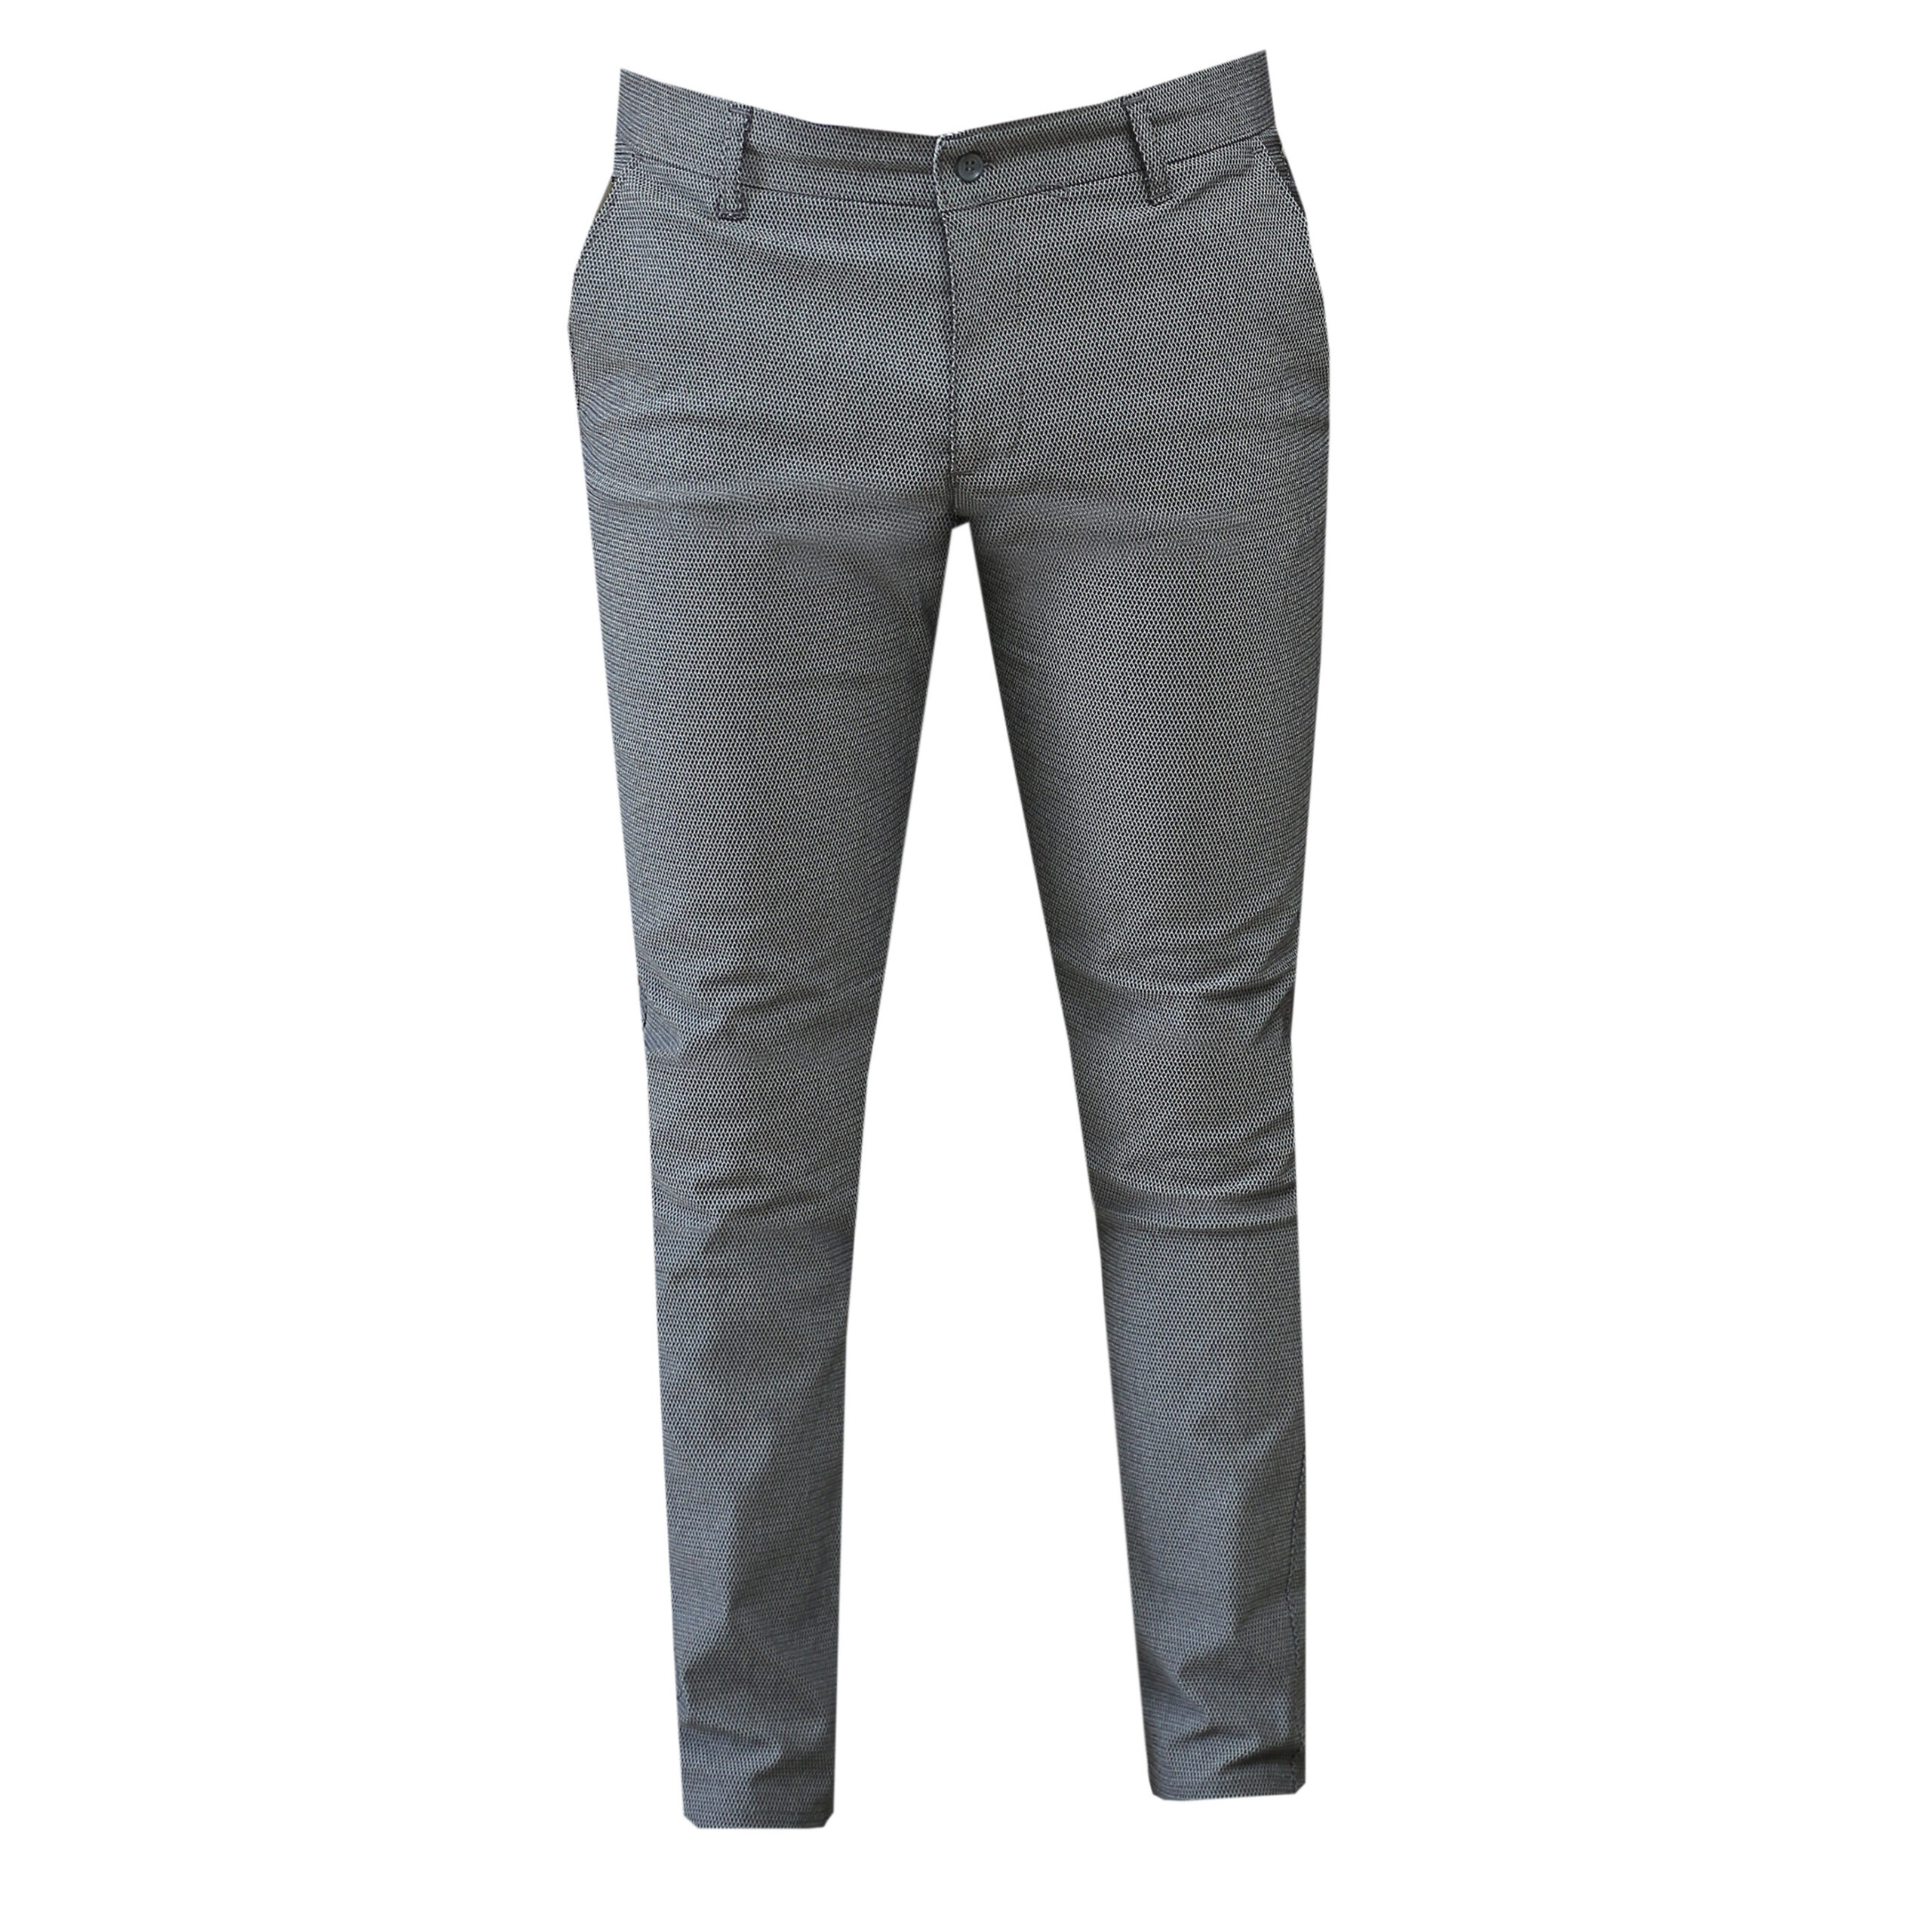 Chino type Pants - Casual Pants